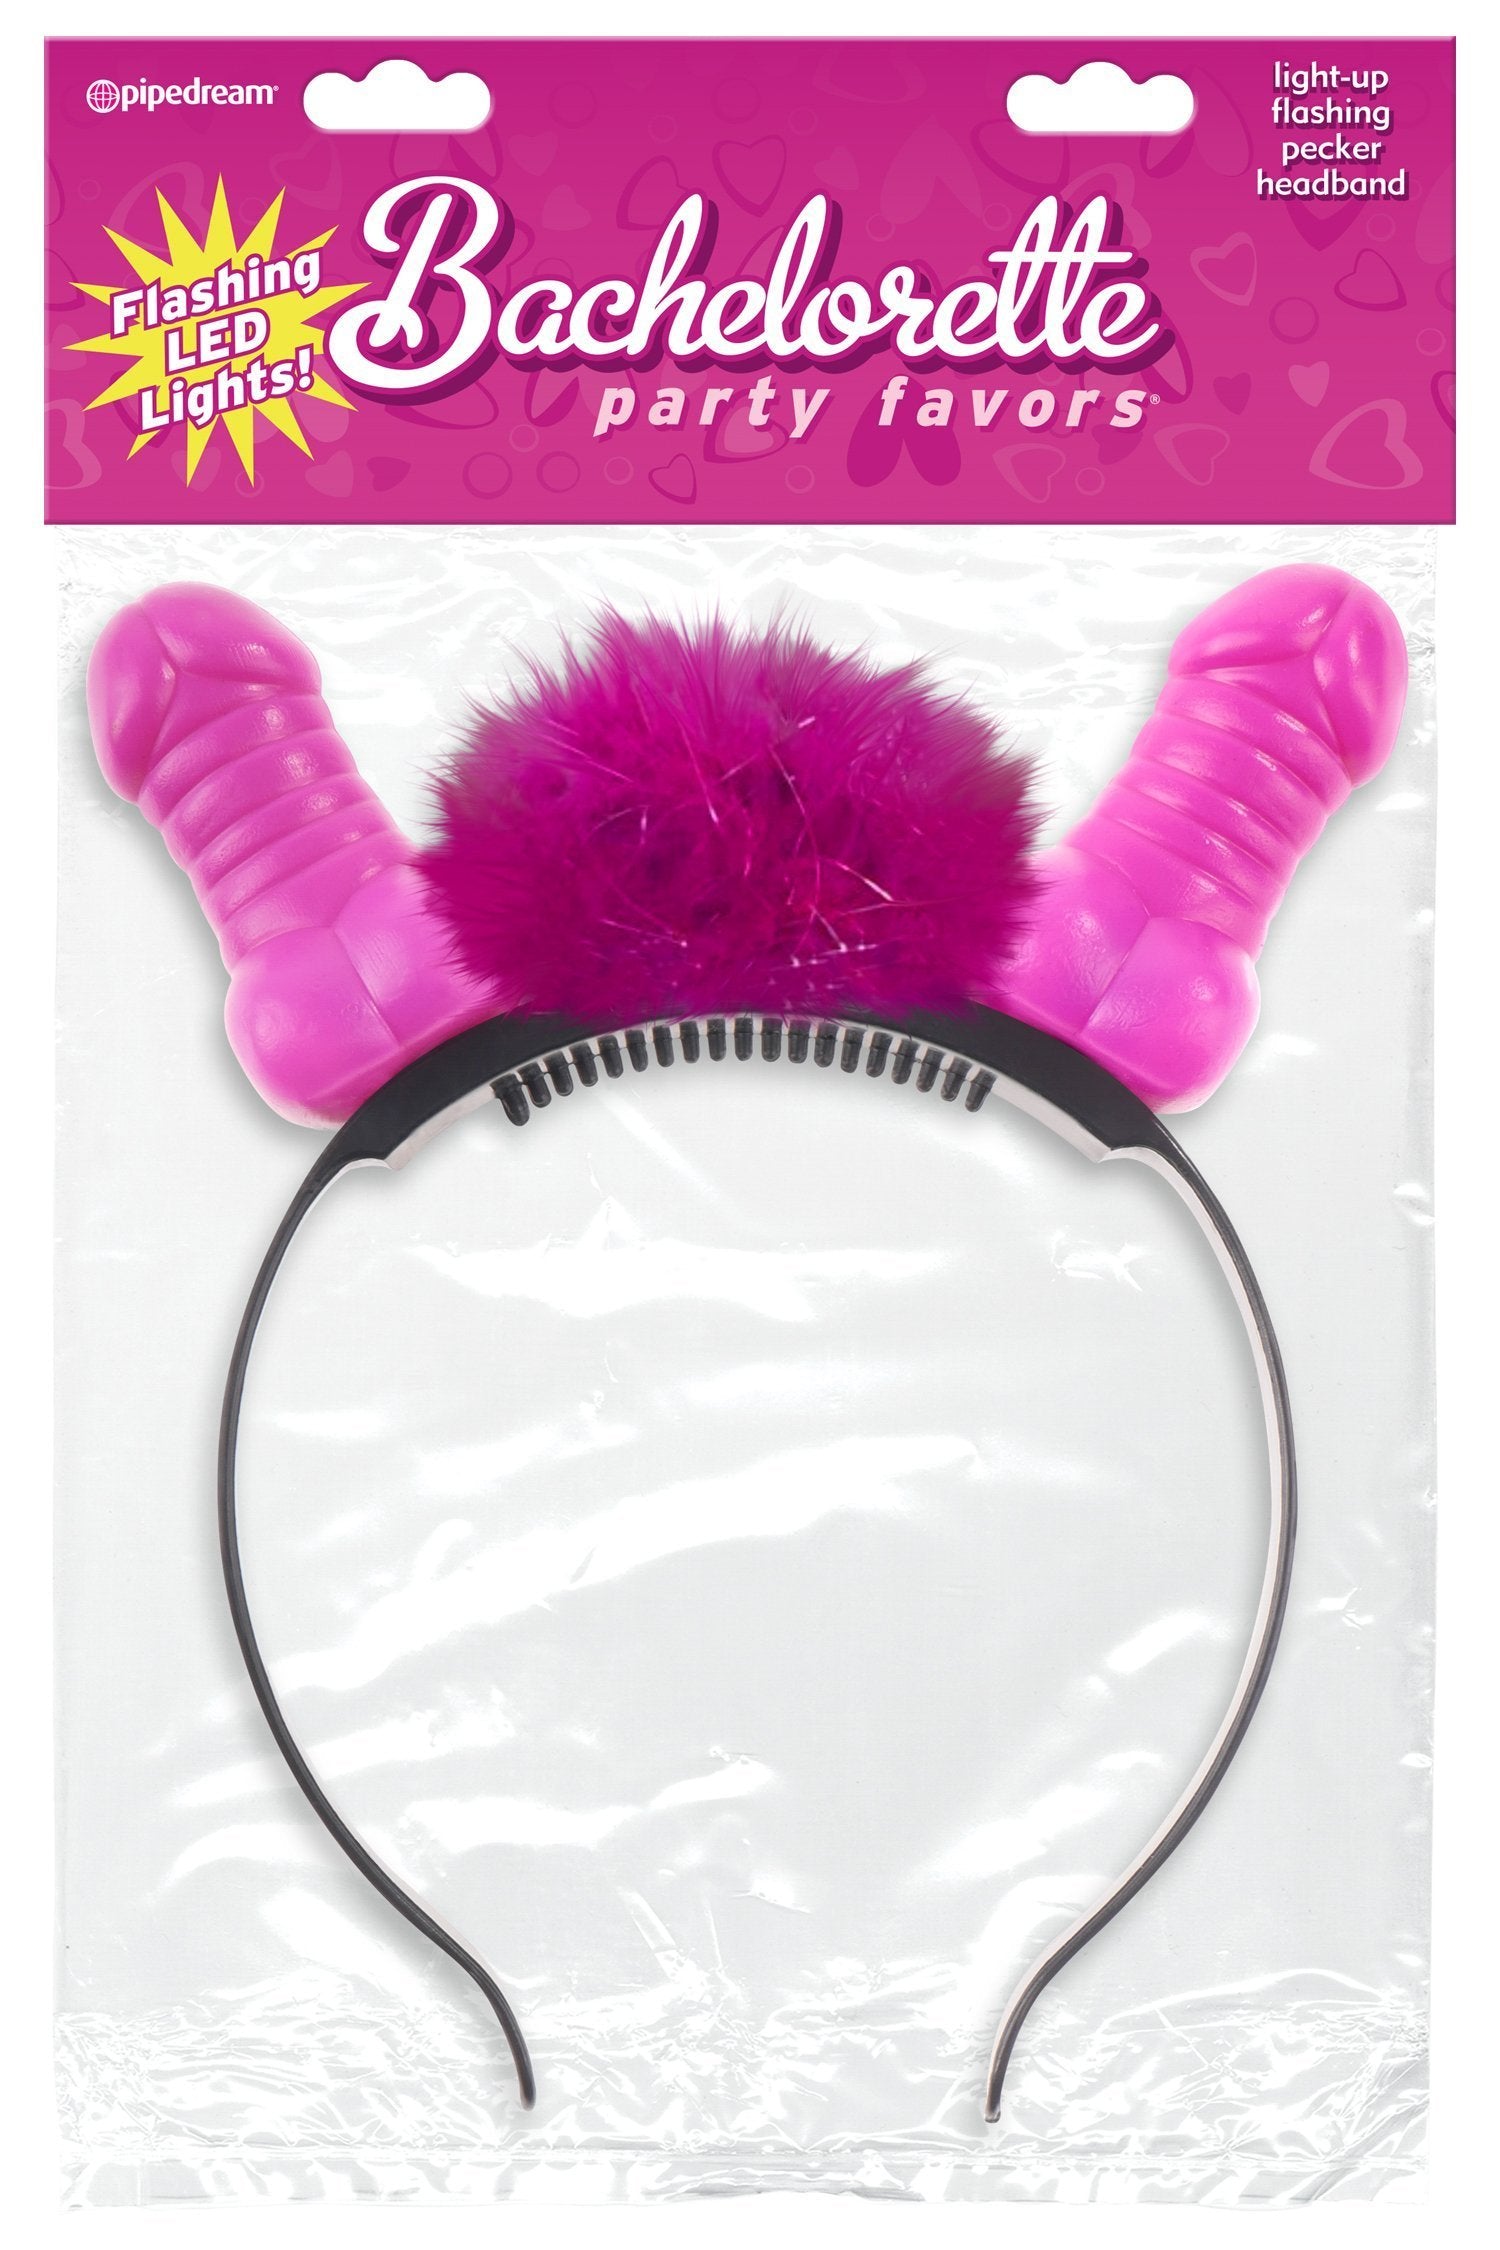 Pipedream - Bachelorette Party Favors Pecker Flashing Headband (Pink) Bachelorette Party Novelties Singapore